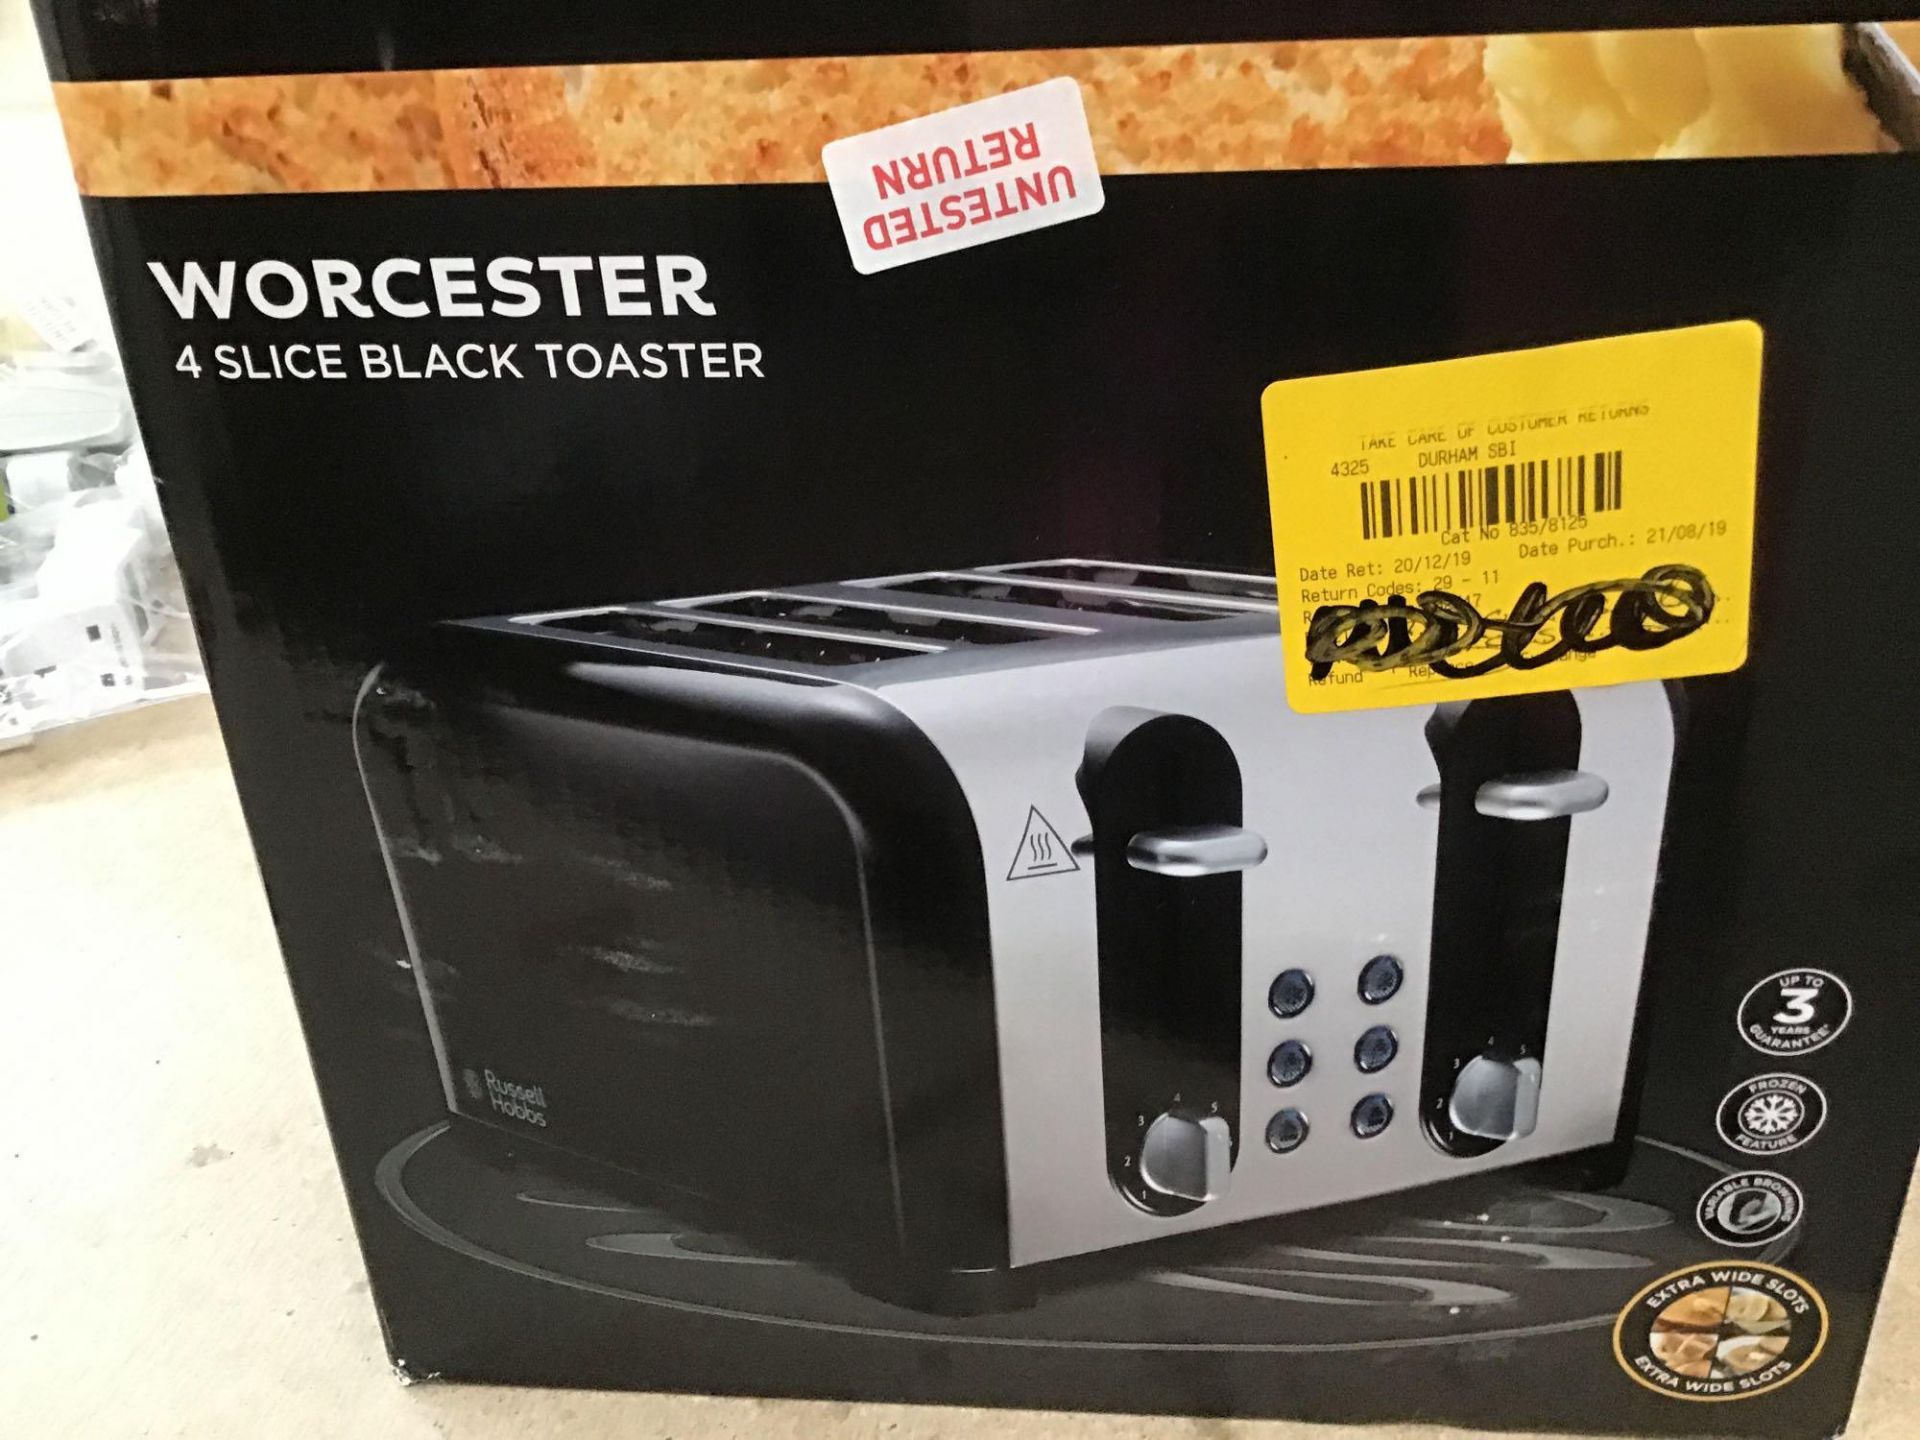 Russell Hobbs 22407 Worcester 4 Slice Toaster - Black - £24.99 RRP - Image 3 of 6